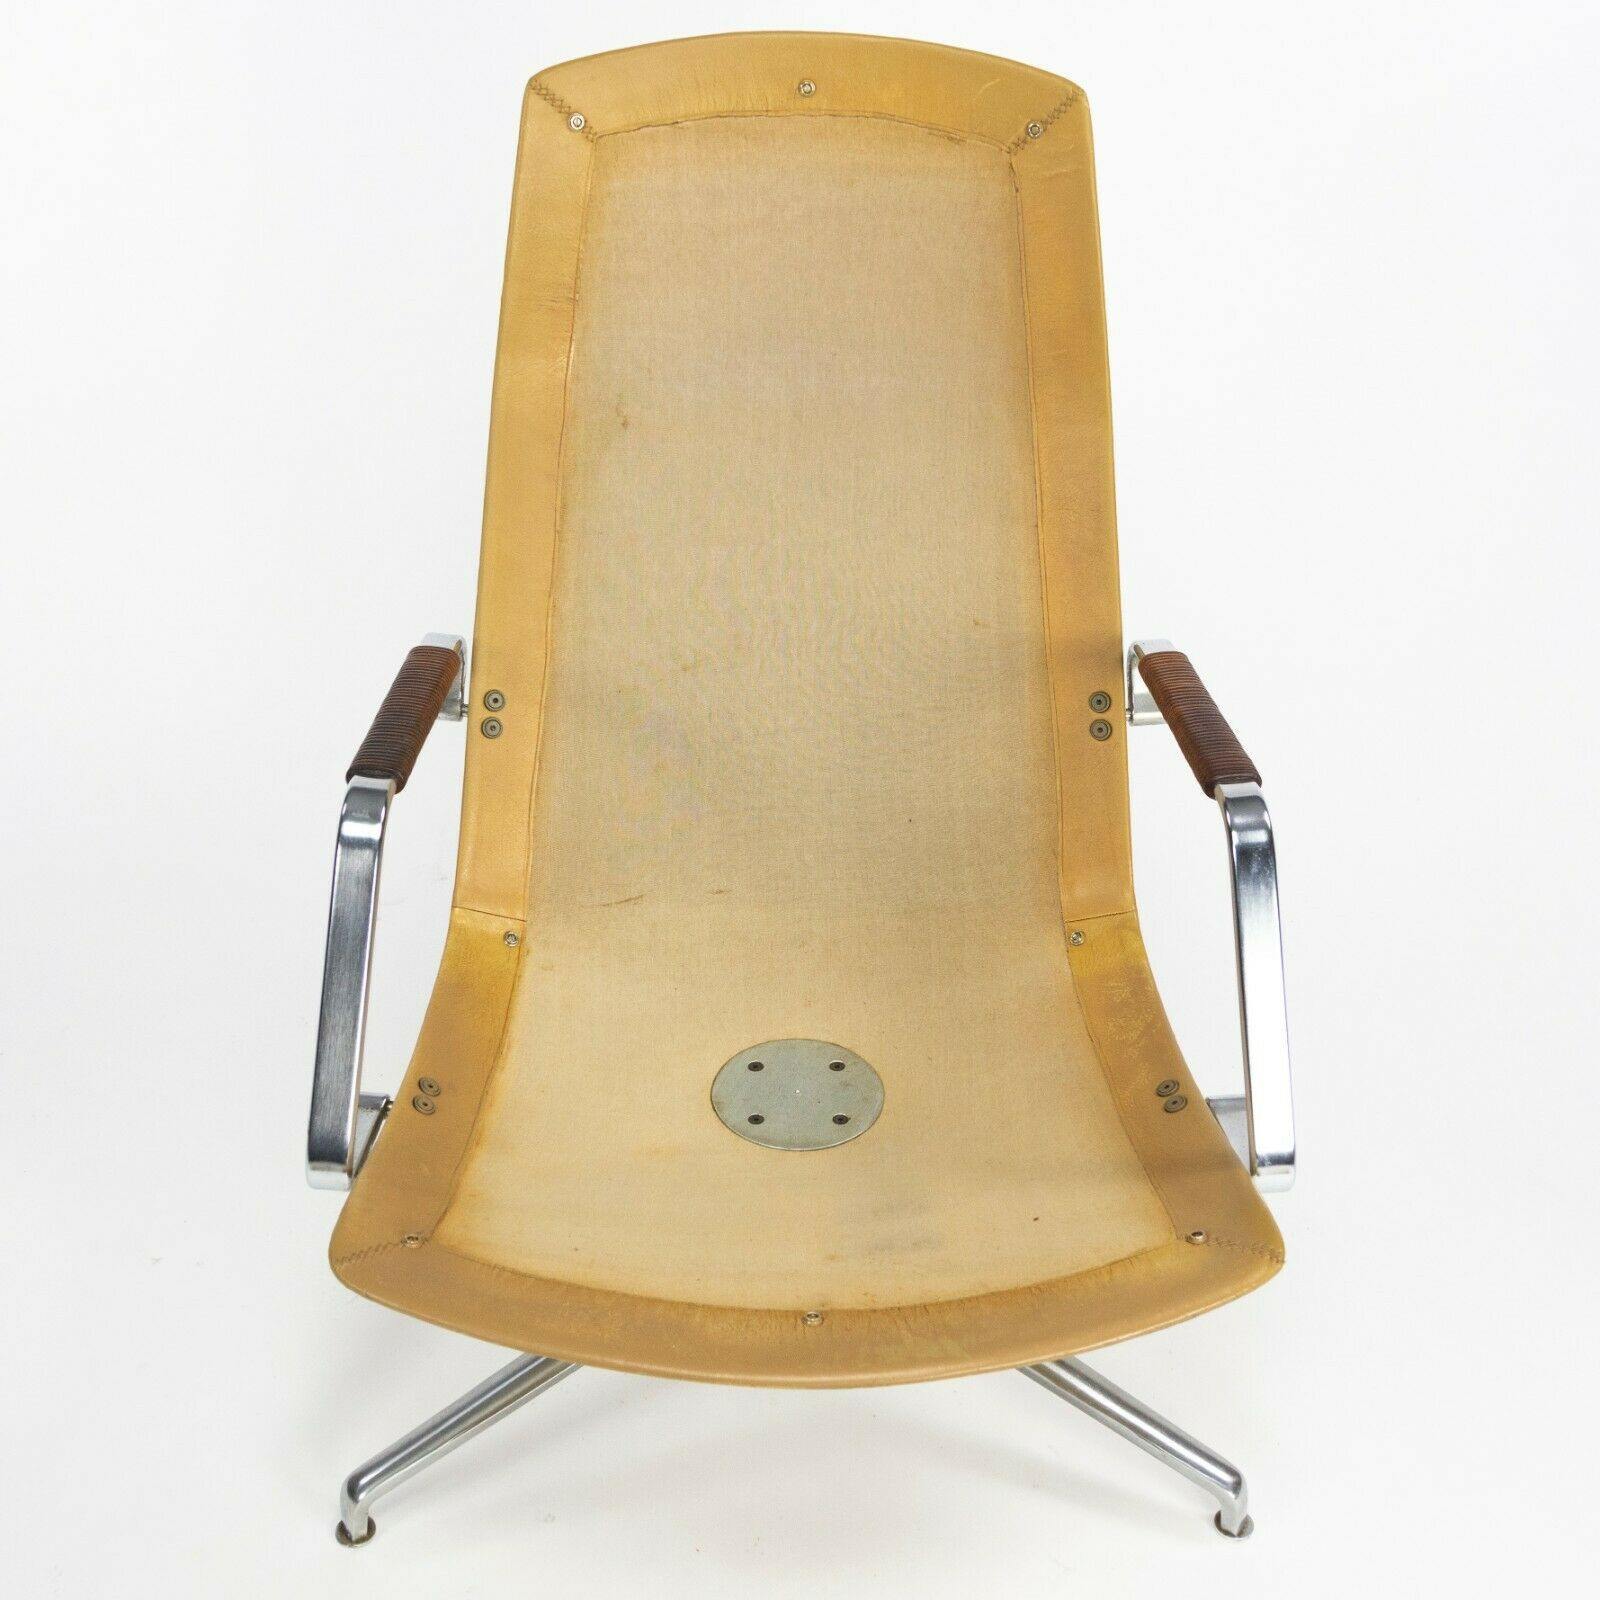 FK86 Lounge Chair